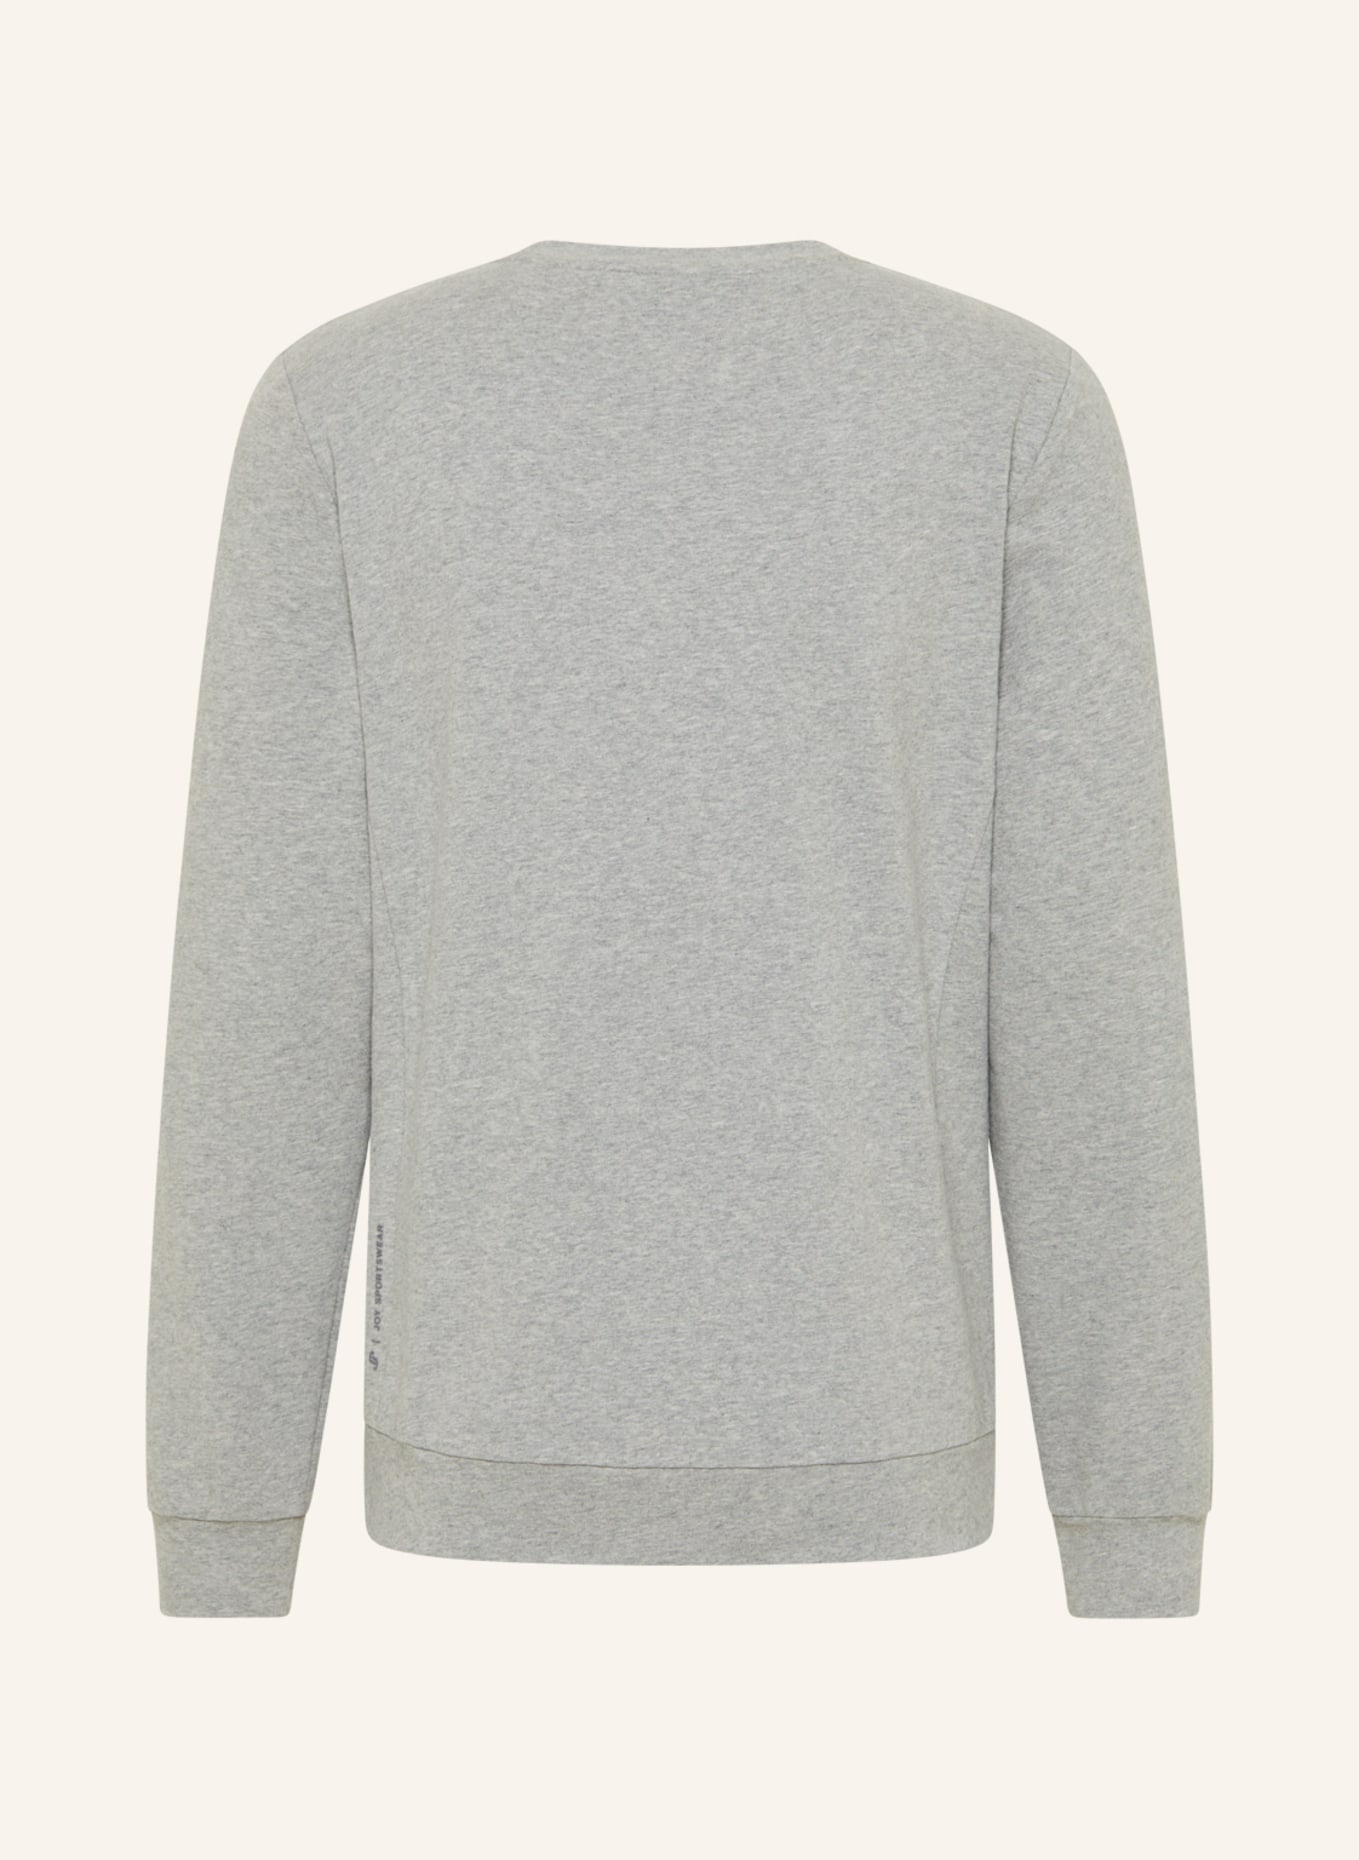 JOY sportswear Sweatshirt MICHA, Farbe: GRAU (Bild 6)